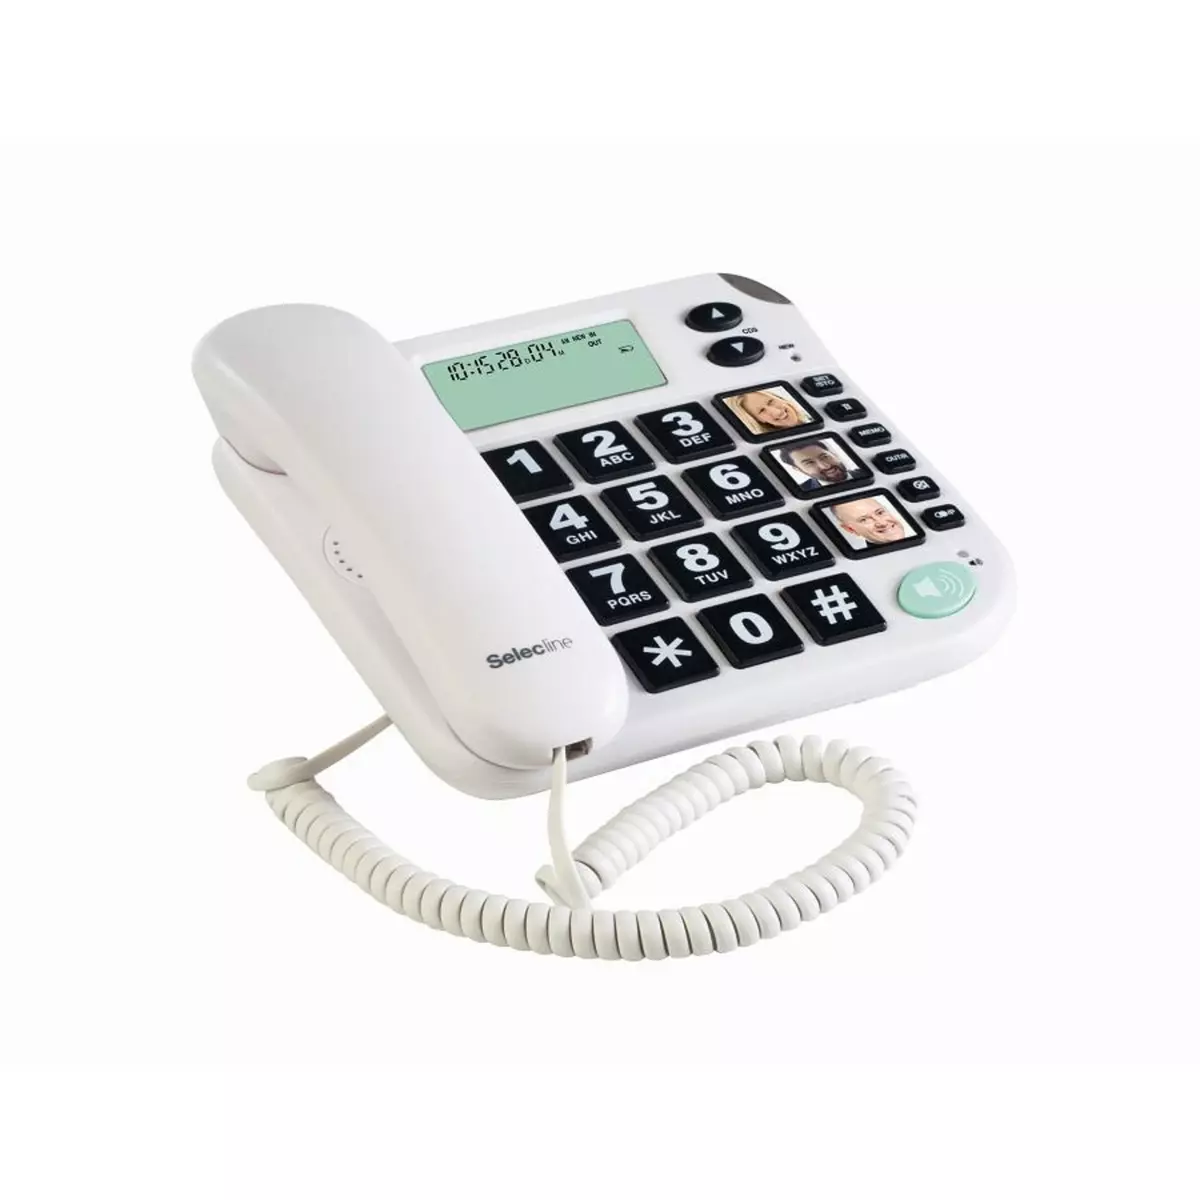 SELECLINE SELECLINE TELEPHONE FILAIRE XL